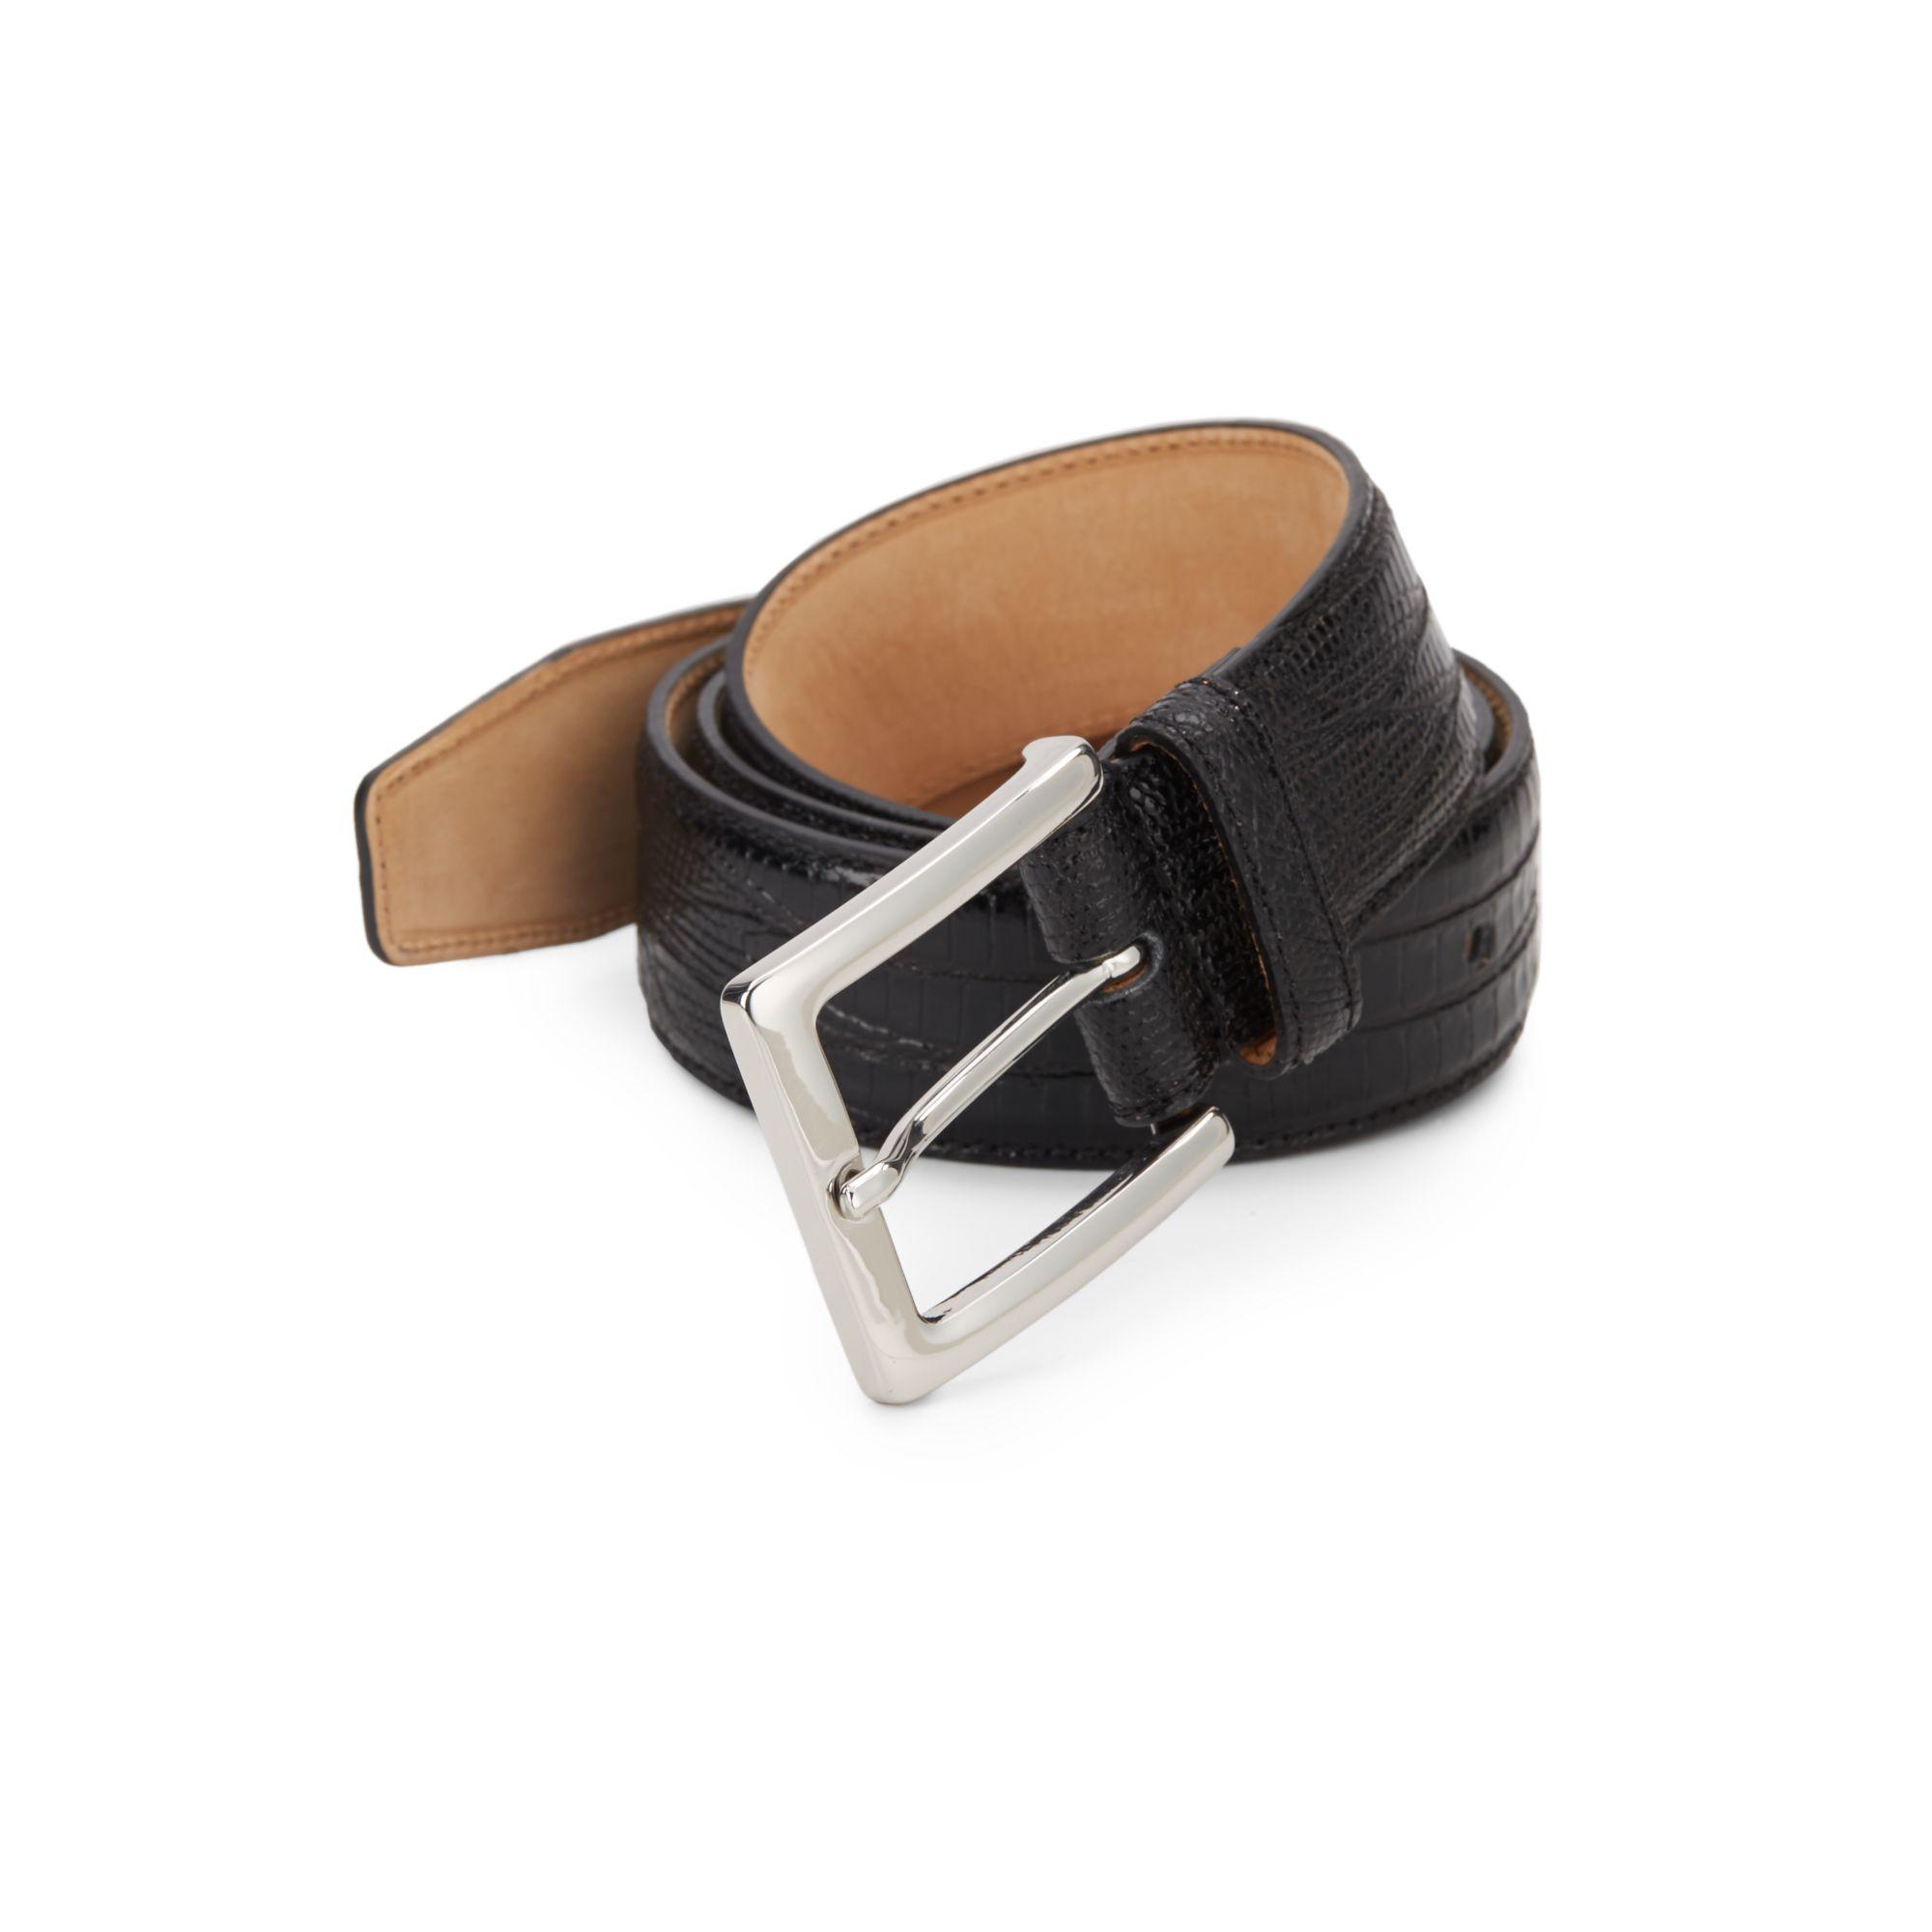 Saks Fifth Avenue Embossed Leather Belt in Brown for Men - Lyst